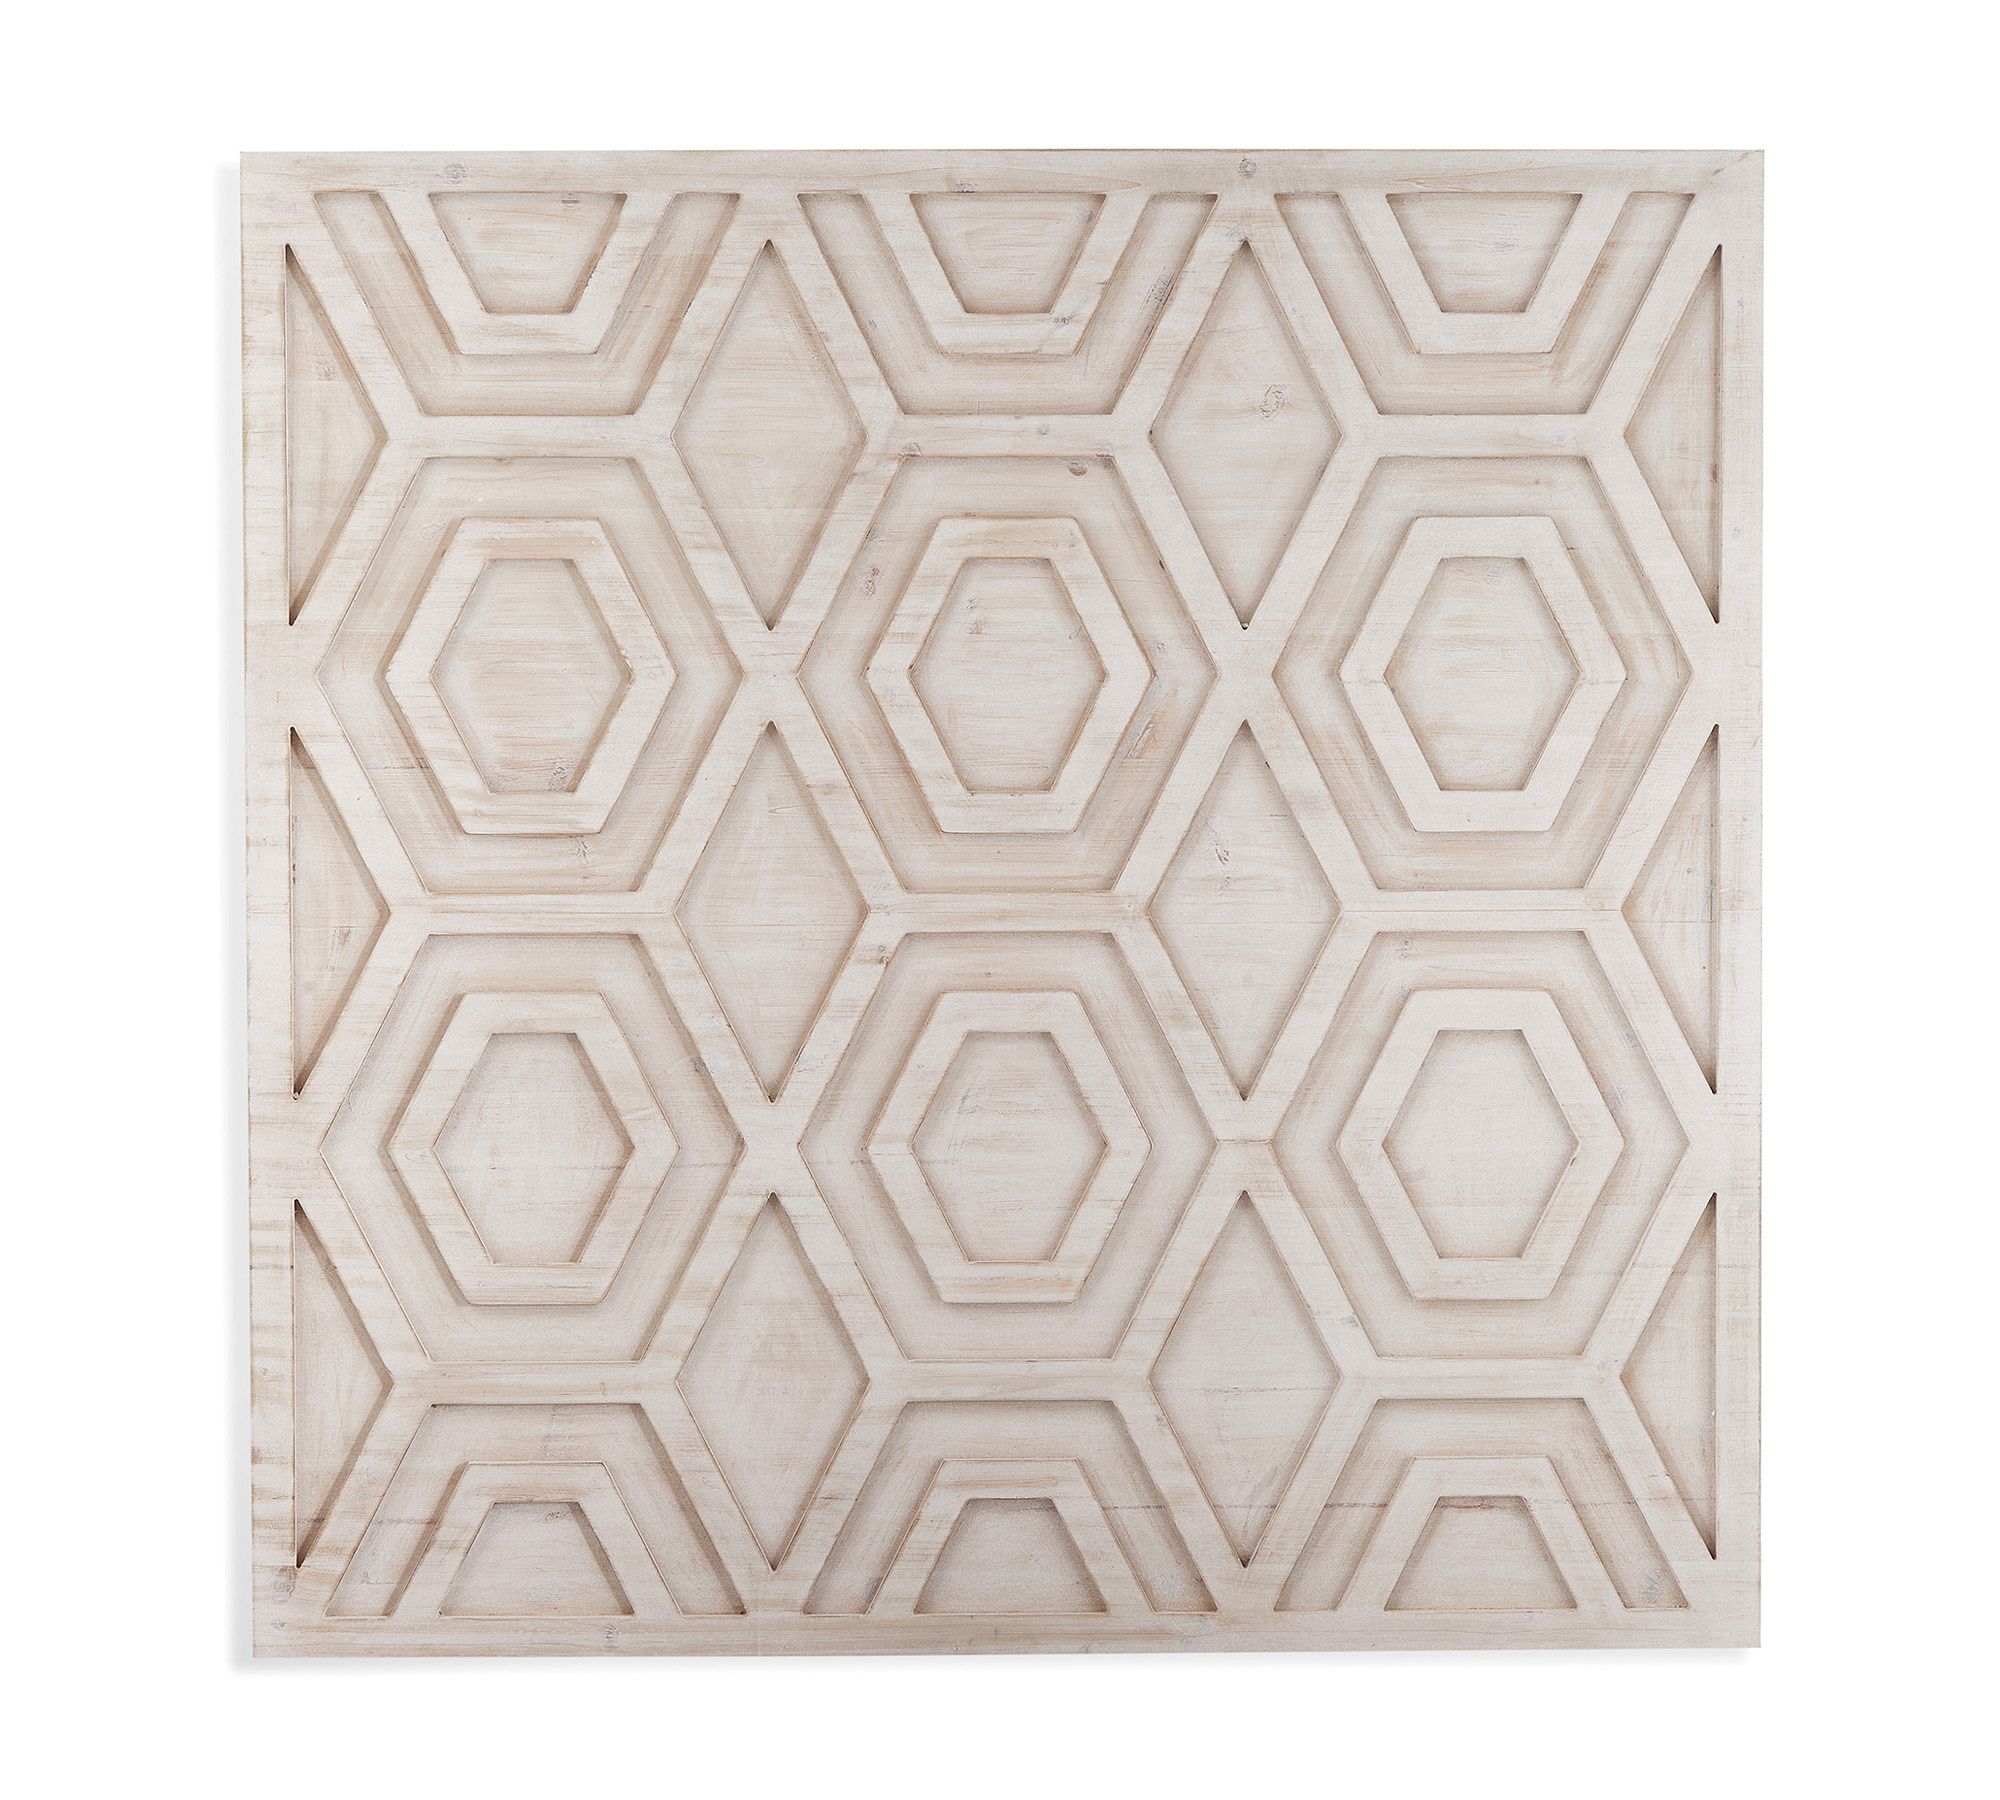 Geometric White Patterned Wall Panel